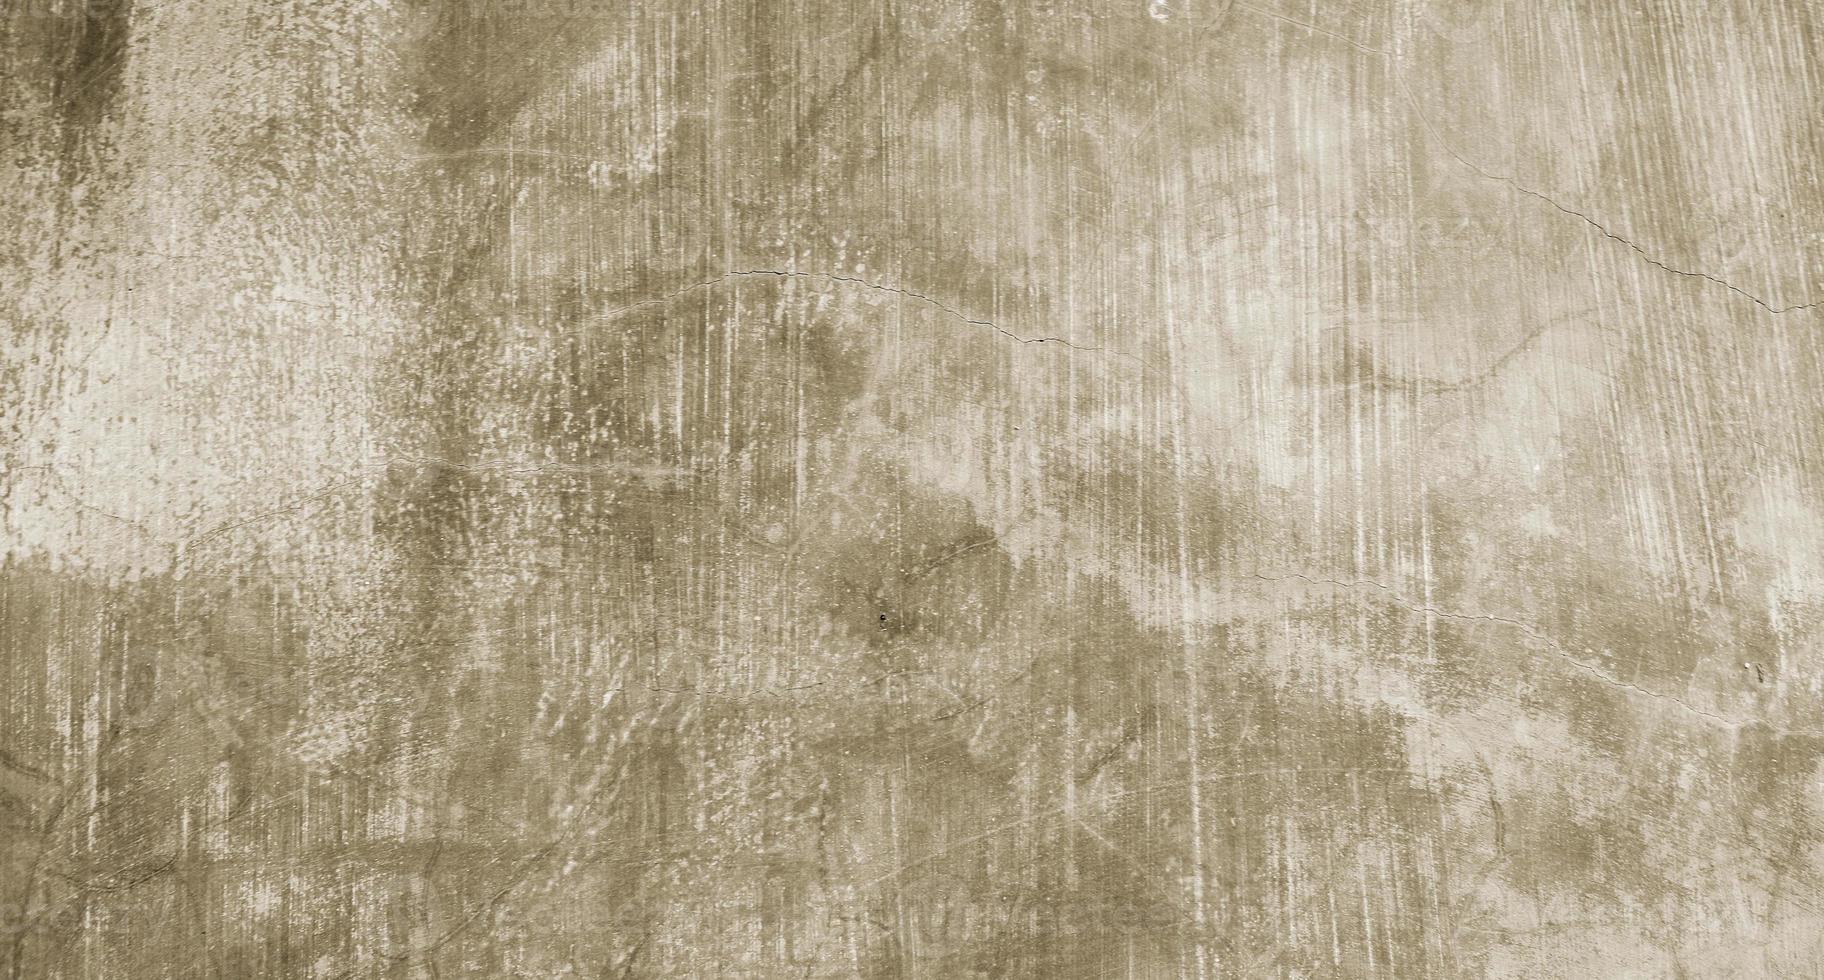 textura de cimento rachado cinza para segundo plano. arranhões na parede foto